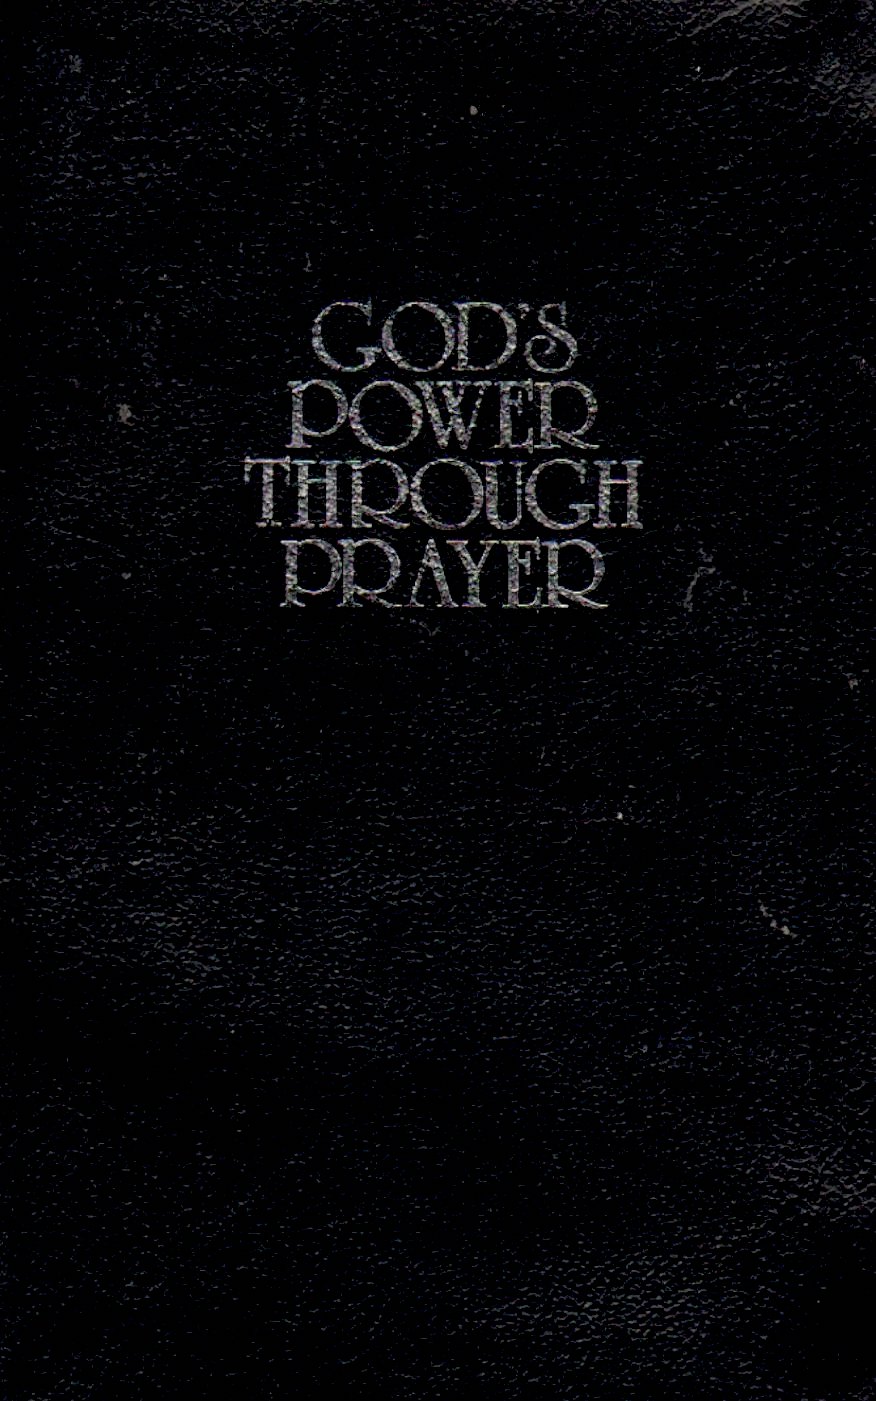 Cover of God's Power Through Prayer